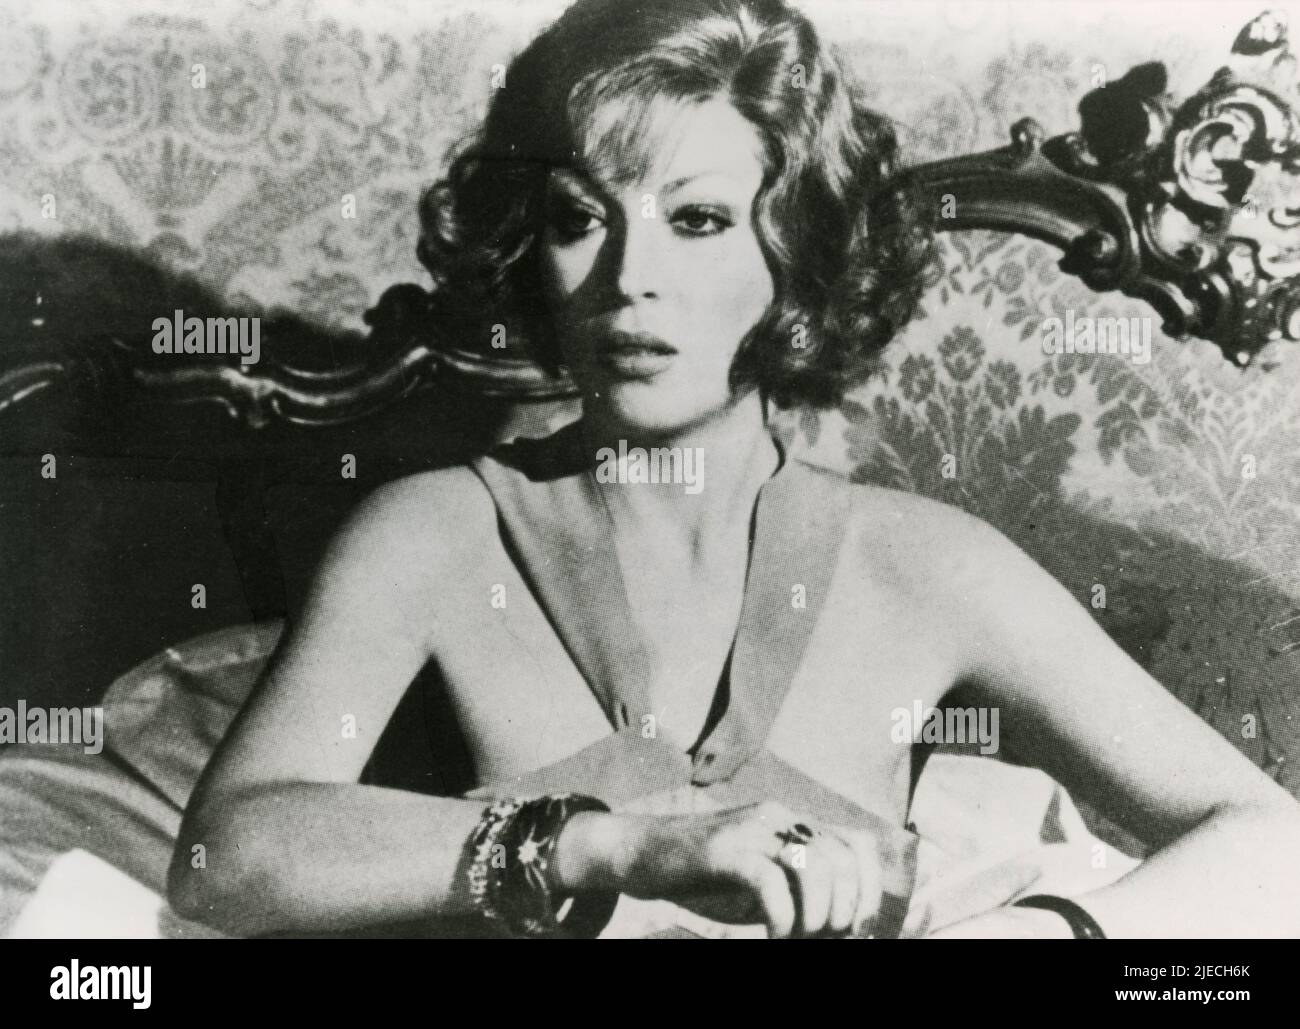 L'attrice inglese Jill Ireland nel film The Valachi Papers, F/i 1972 Foto Stock